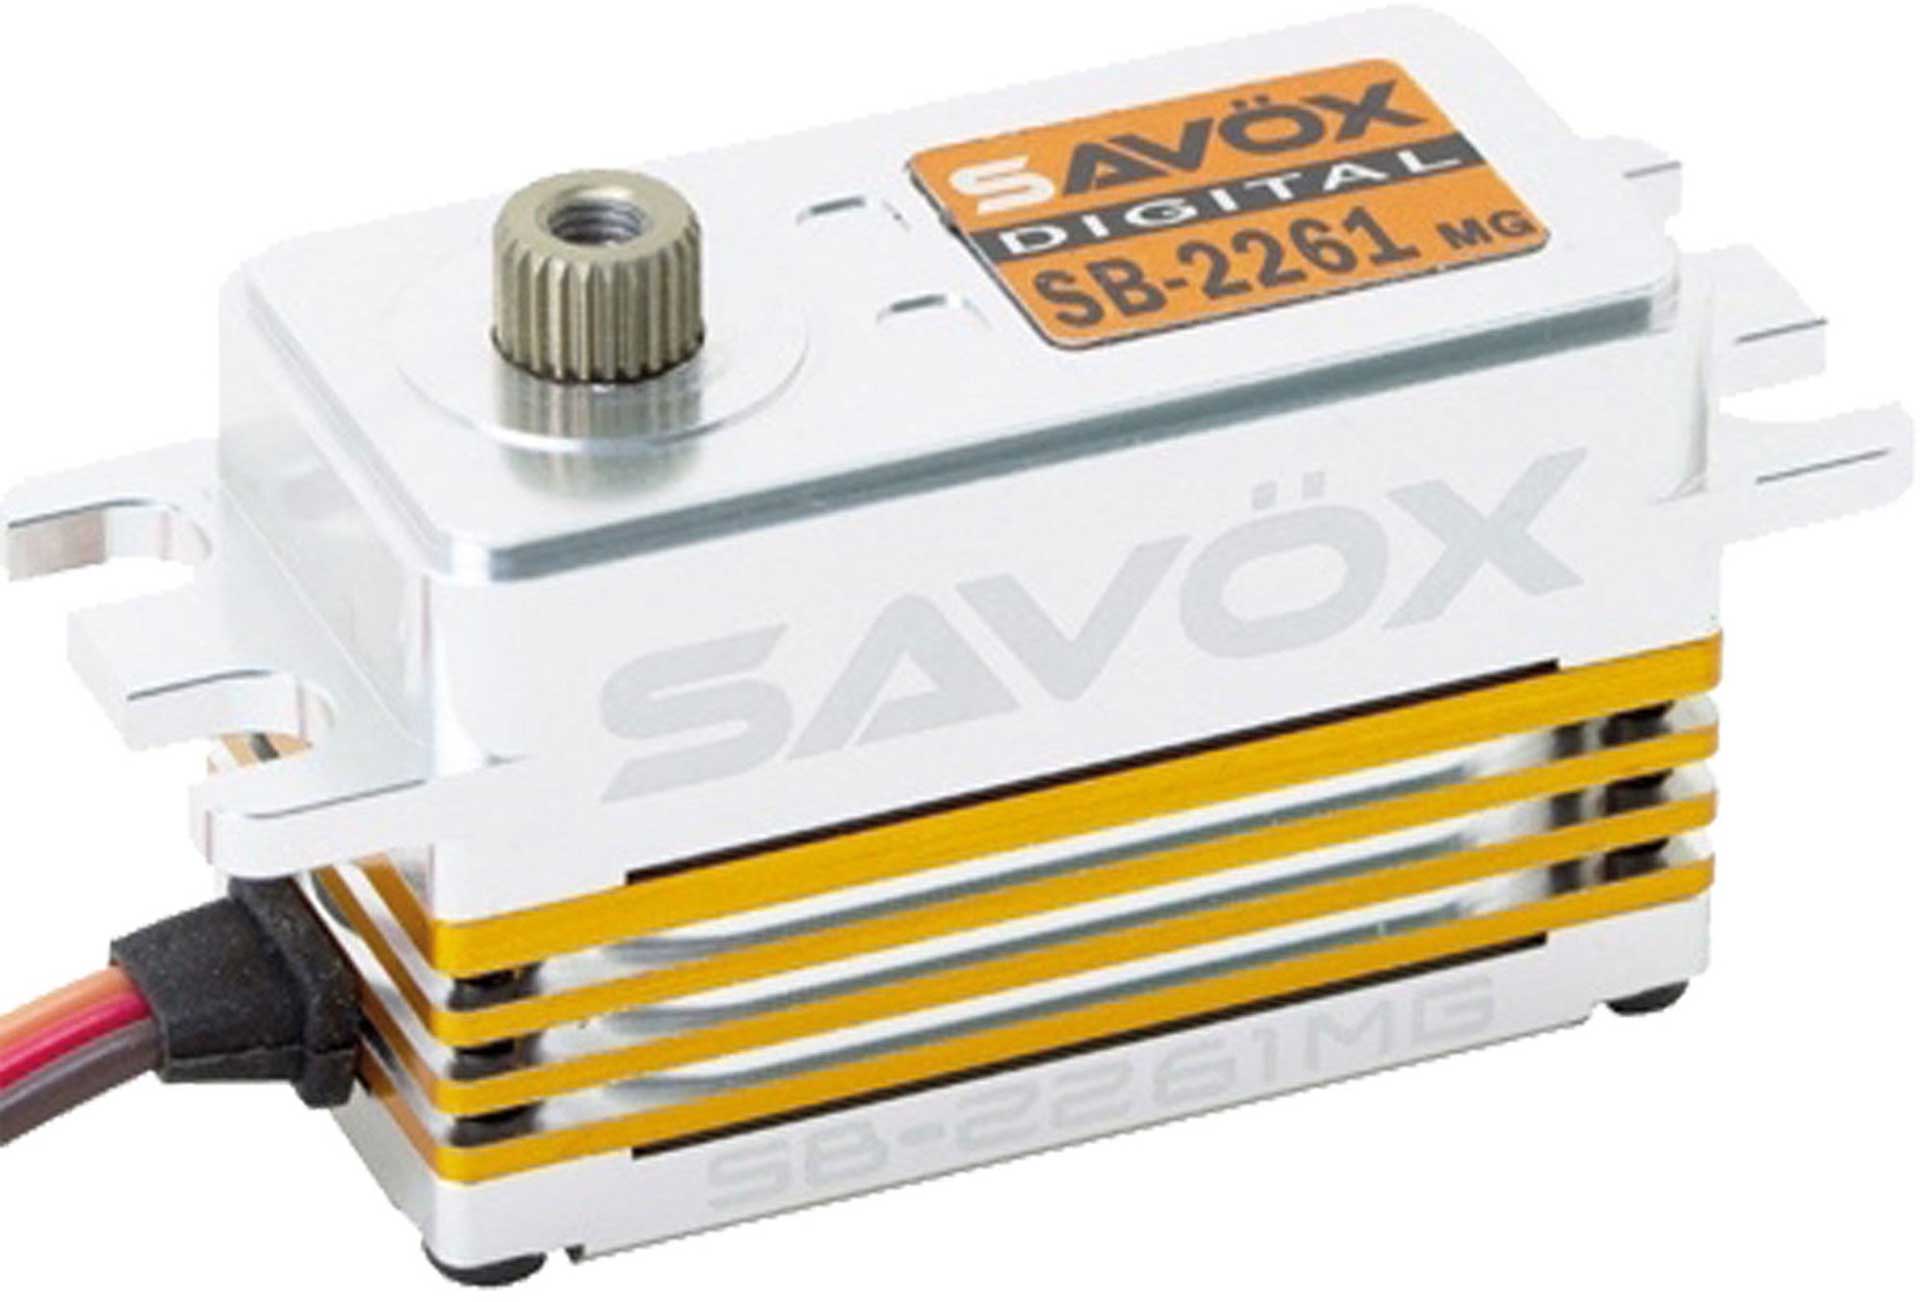 SAVÖX SB-2261MG (6V/10KG/0,076s) BRUSHLESS DIGITAL LOW PROFILE SERVO